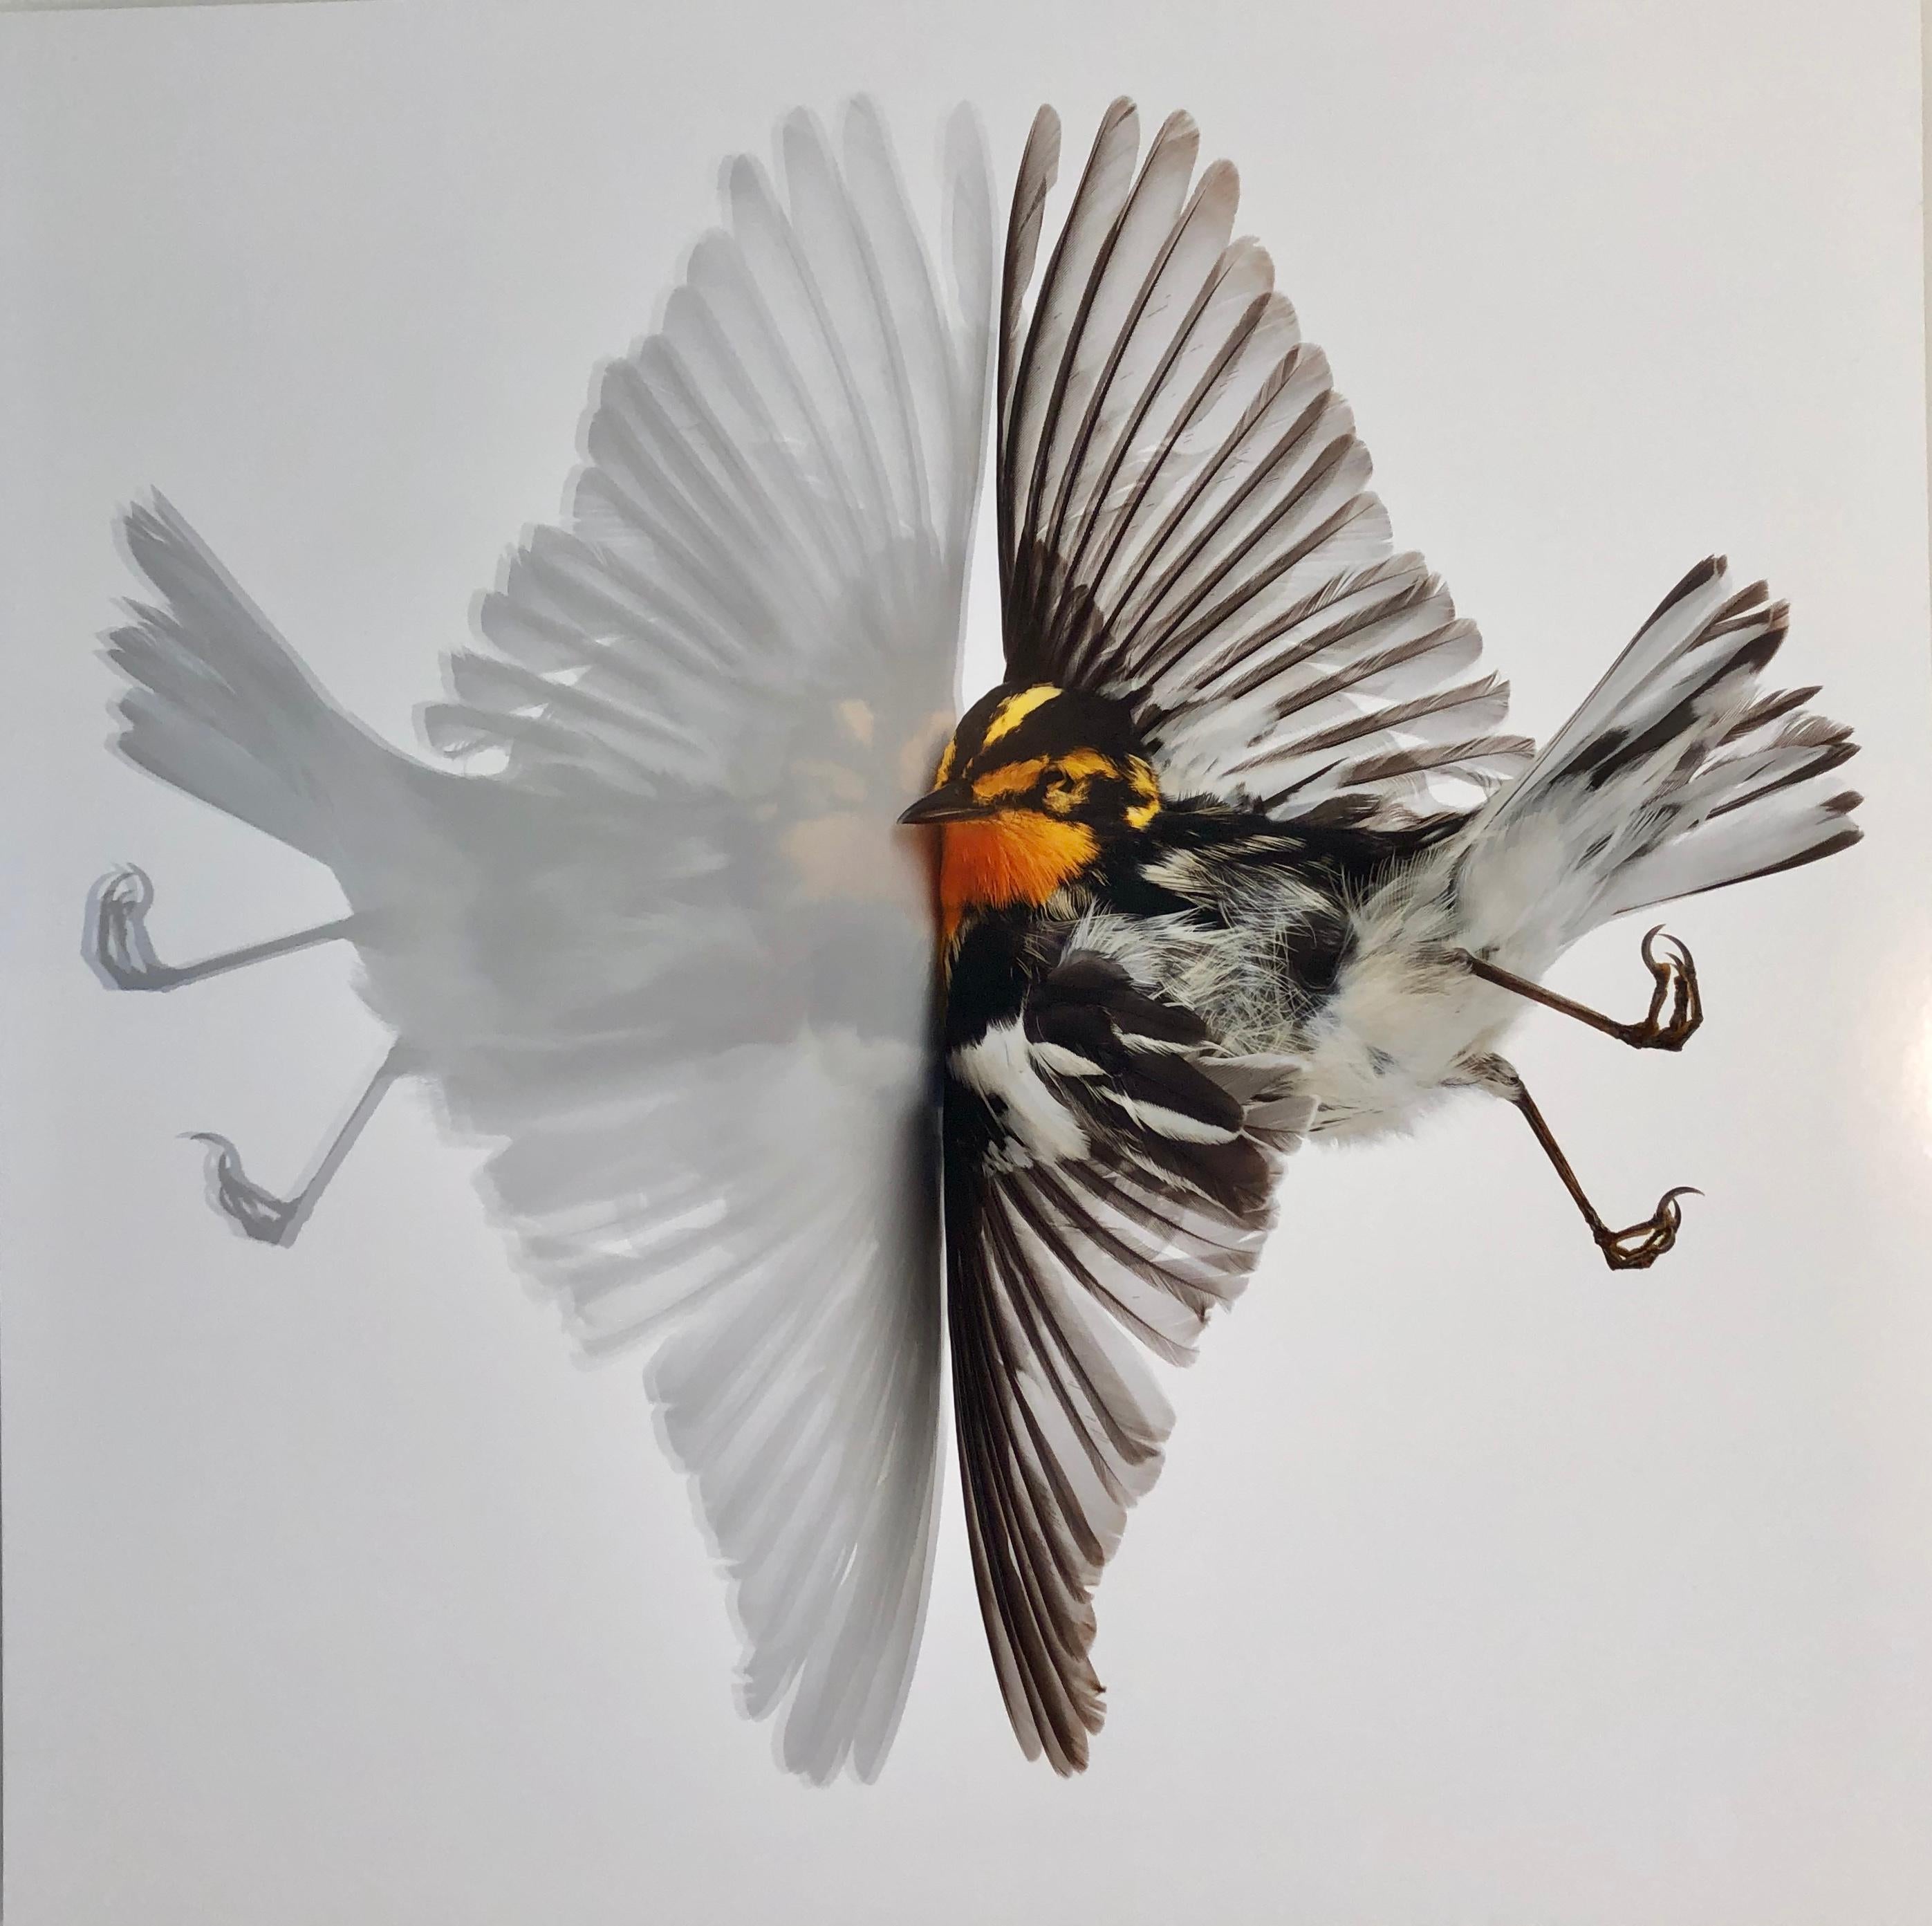 Miranda Brandon Still-Life Photograph - "Blackburnian Warbler" Close up photograph of bird with its reflection mirrored